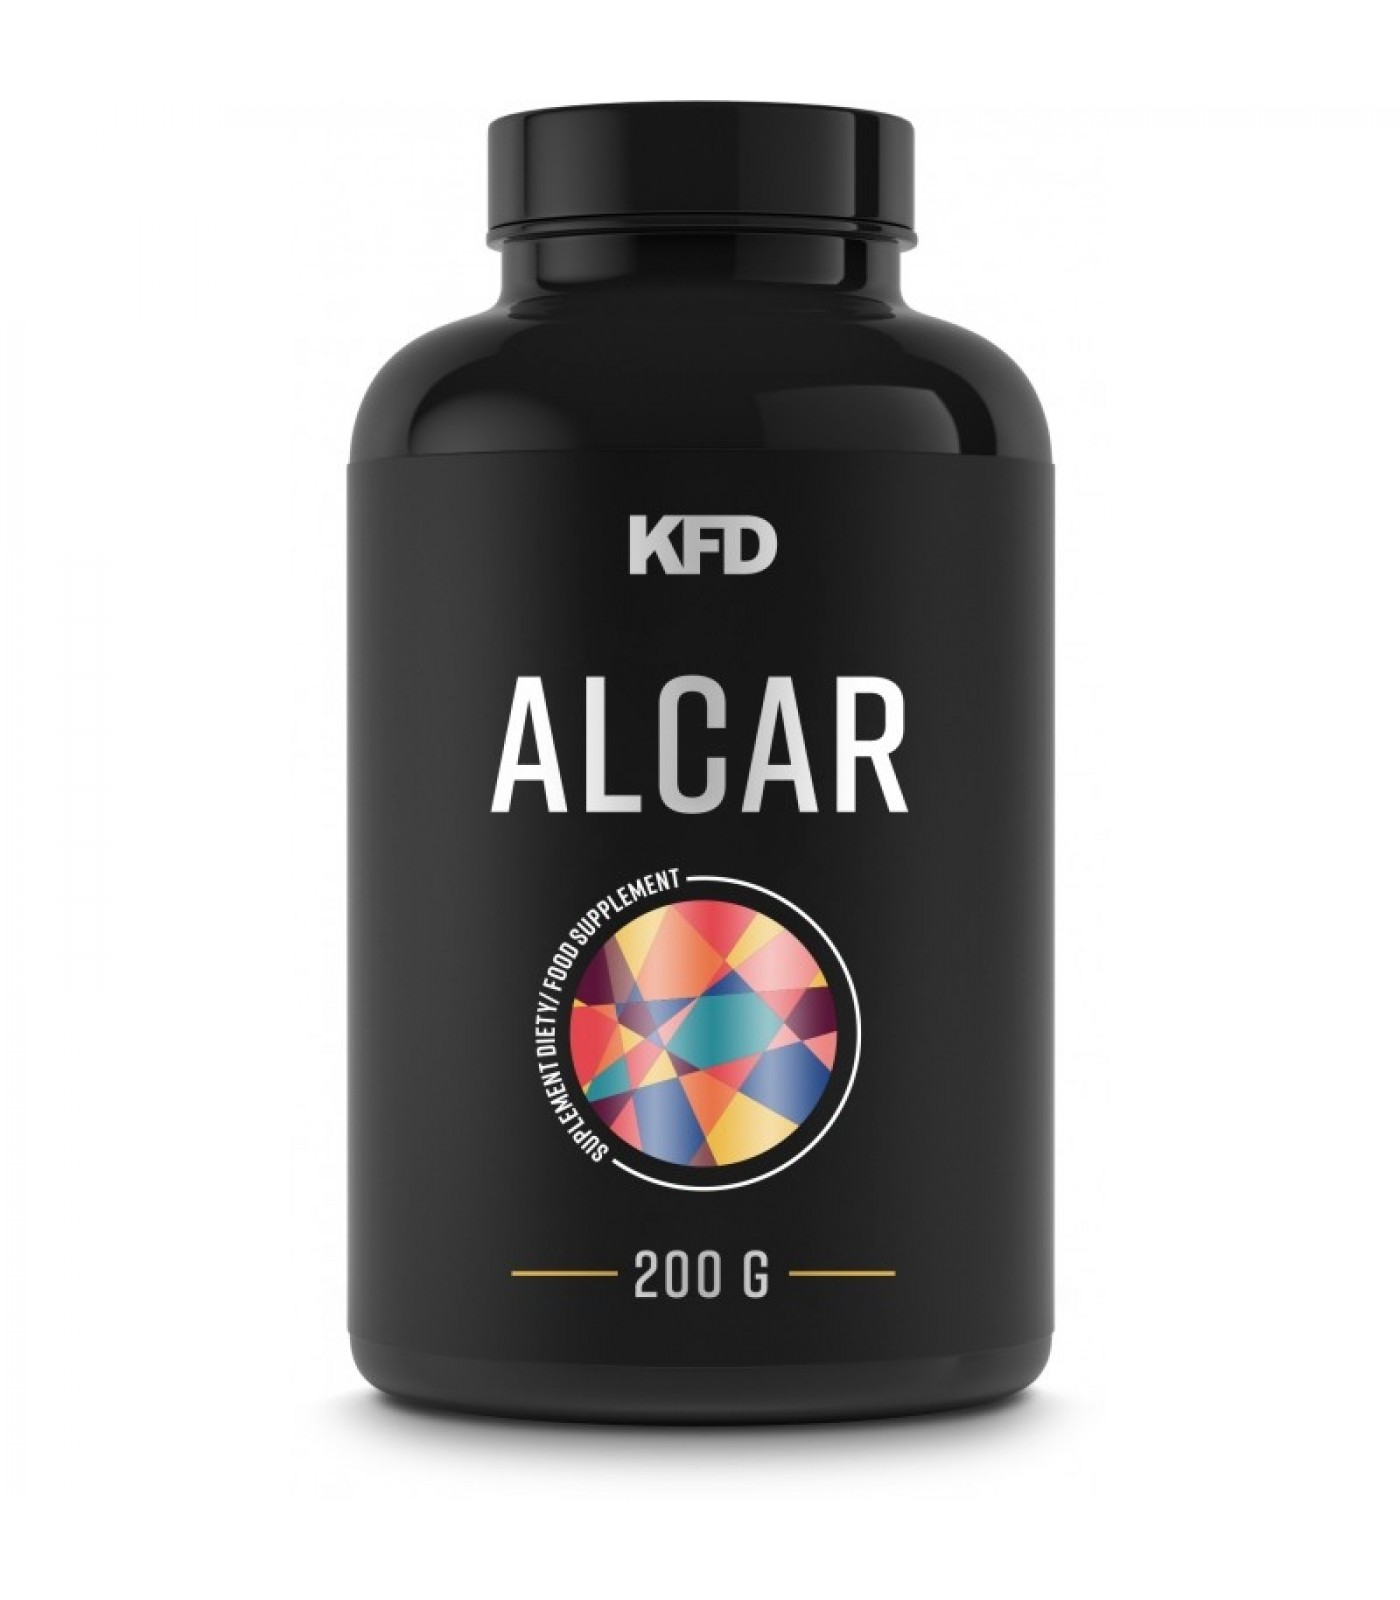 KFD ALCAR - Acetyl L-Carnitine / 200g